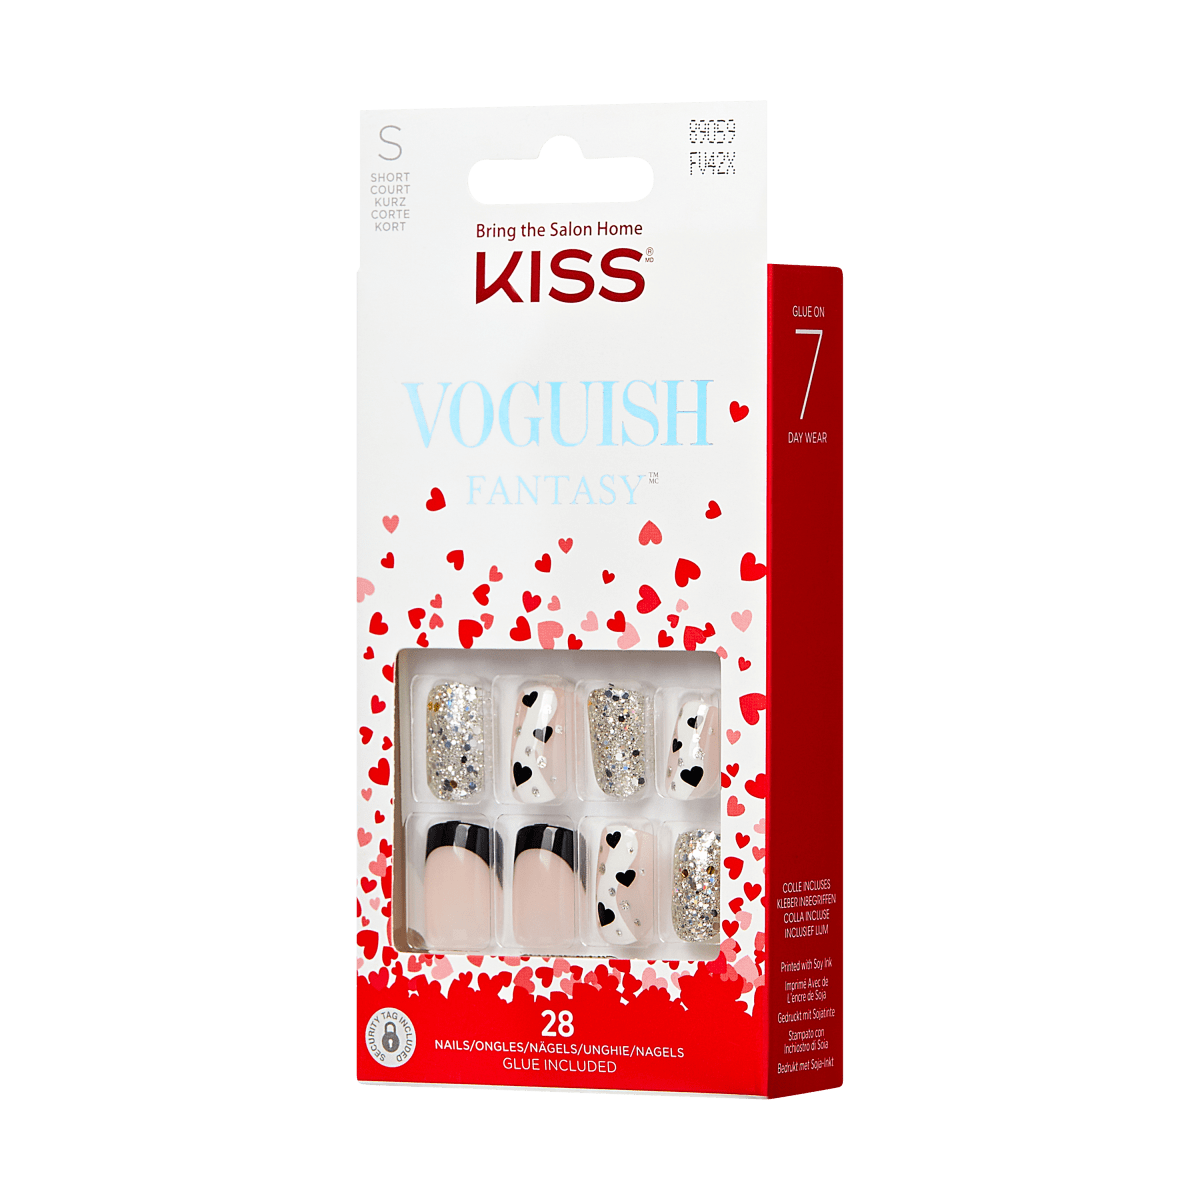 KISS Voguish Fantasy Nails - Love is Blind